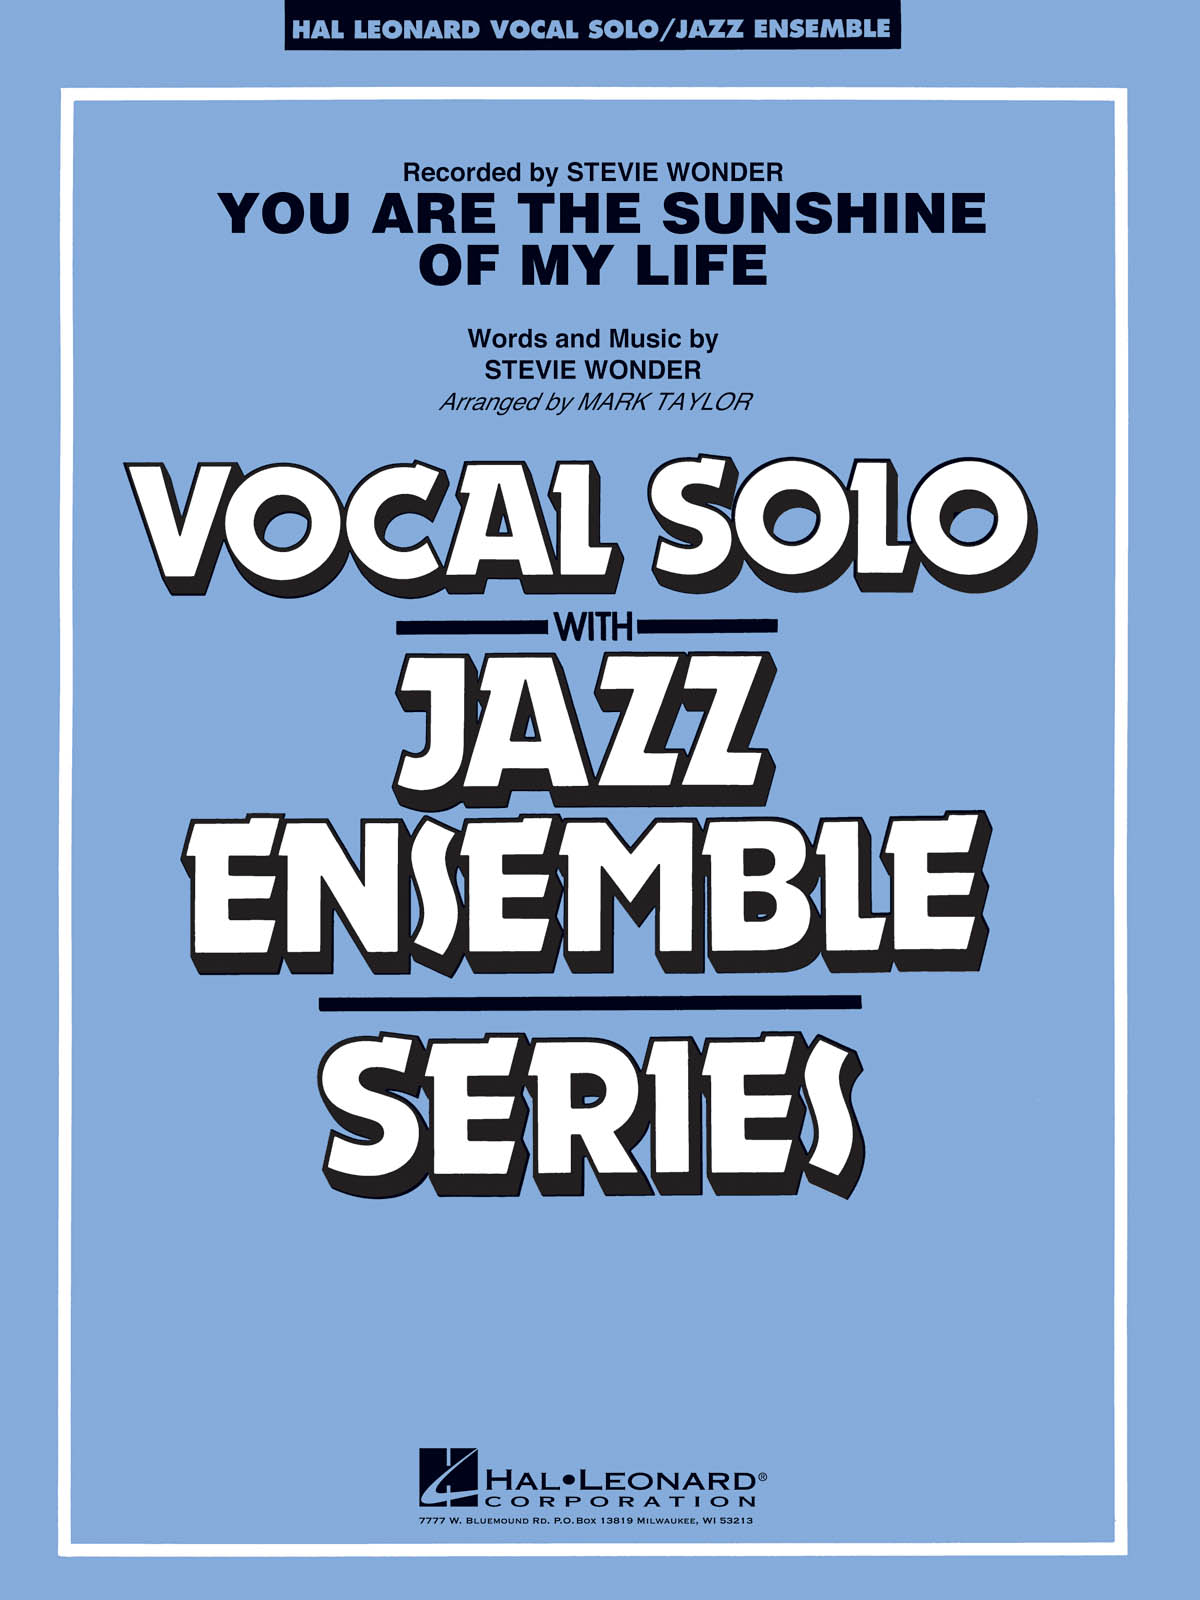 Stevie Wonder: You Are the Sunshine of My Life (Key: C): Jazz Ensemble and